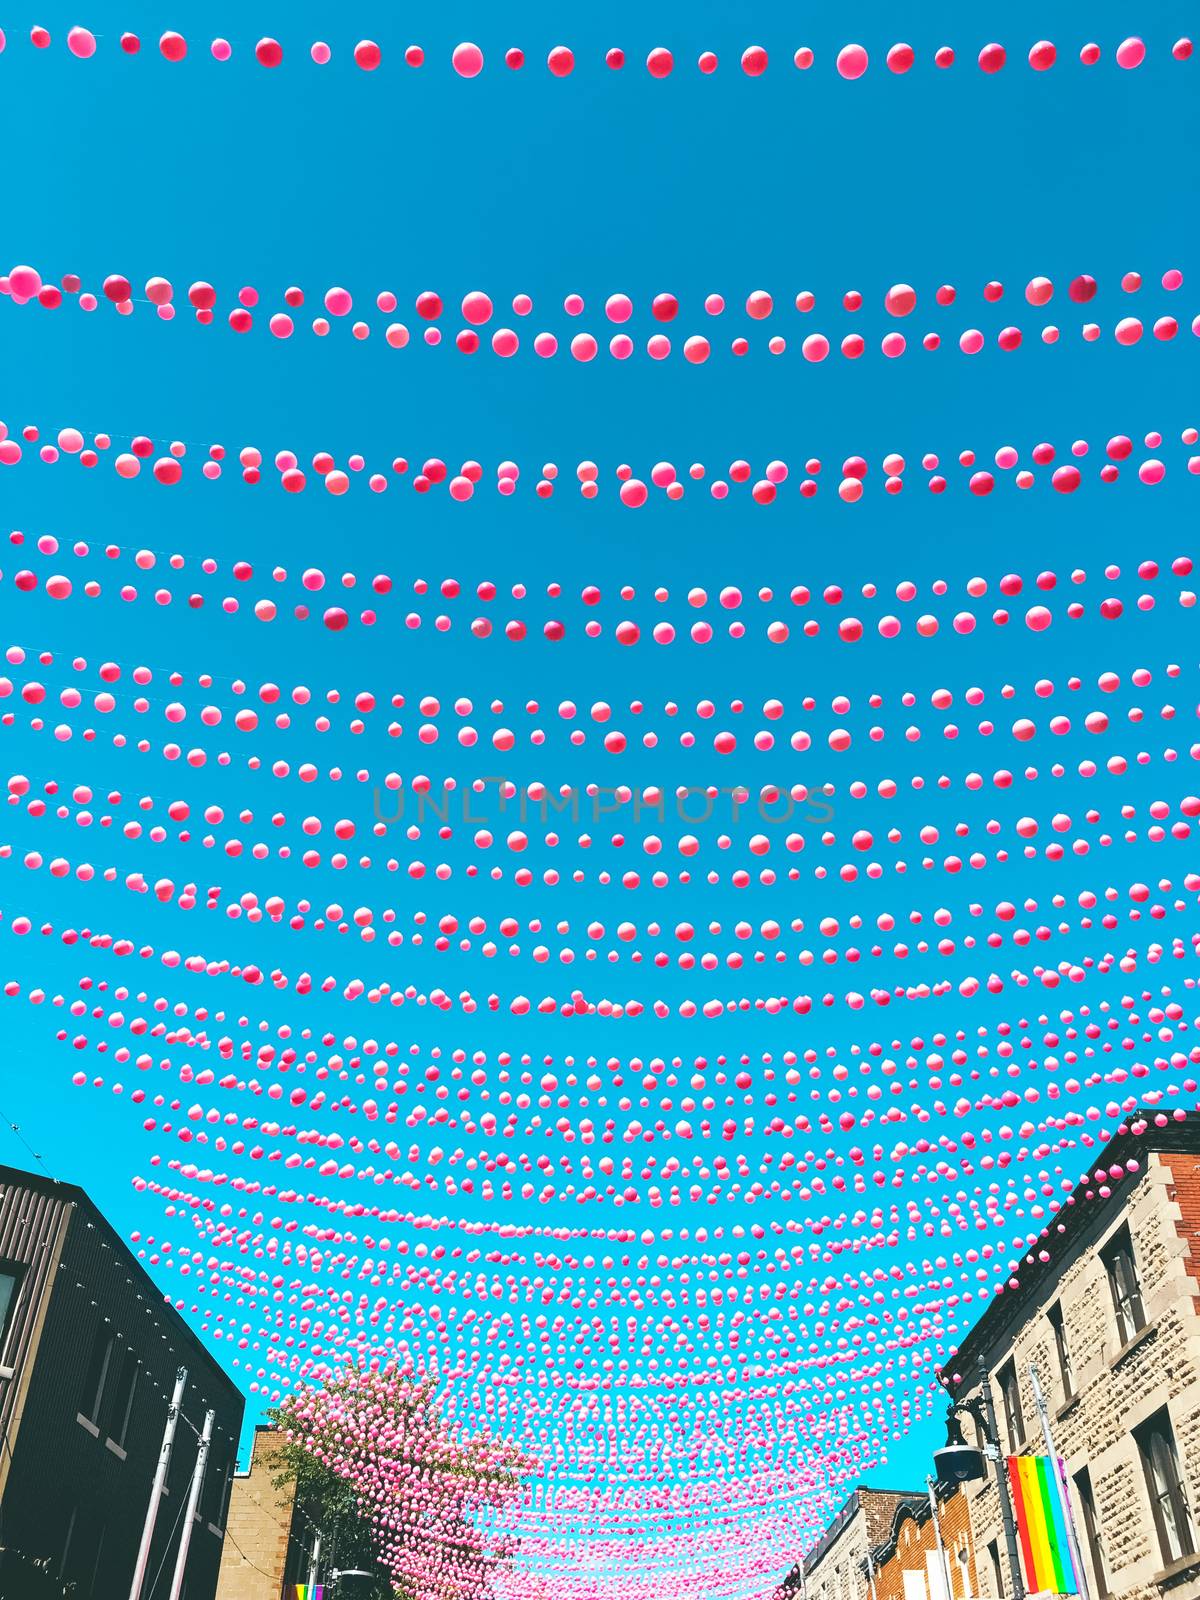 Joyful street in gay neighborhood decorated with pink balloons by anikasalsera